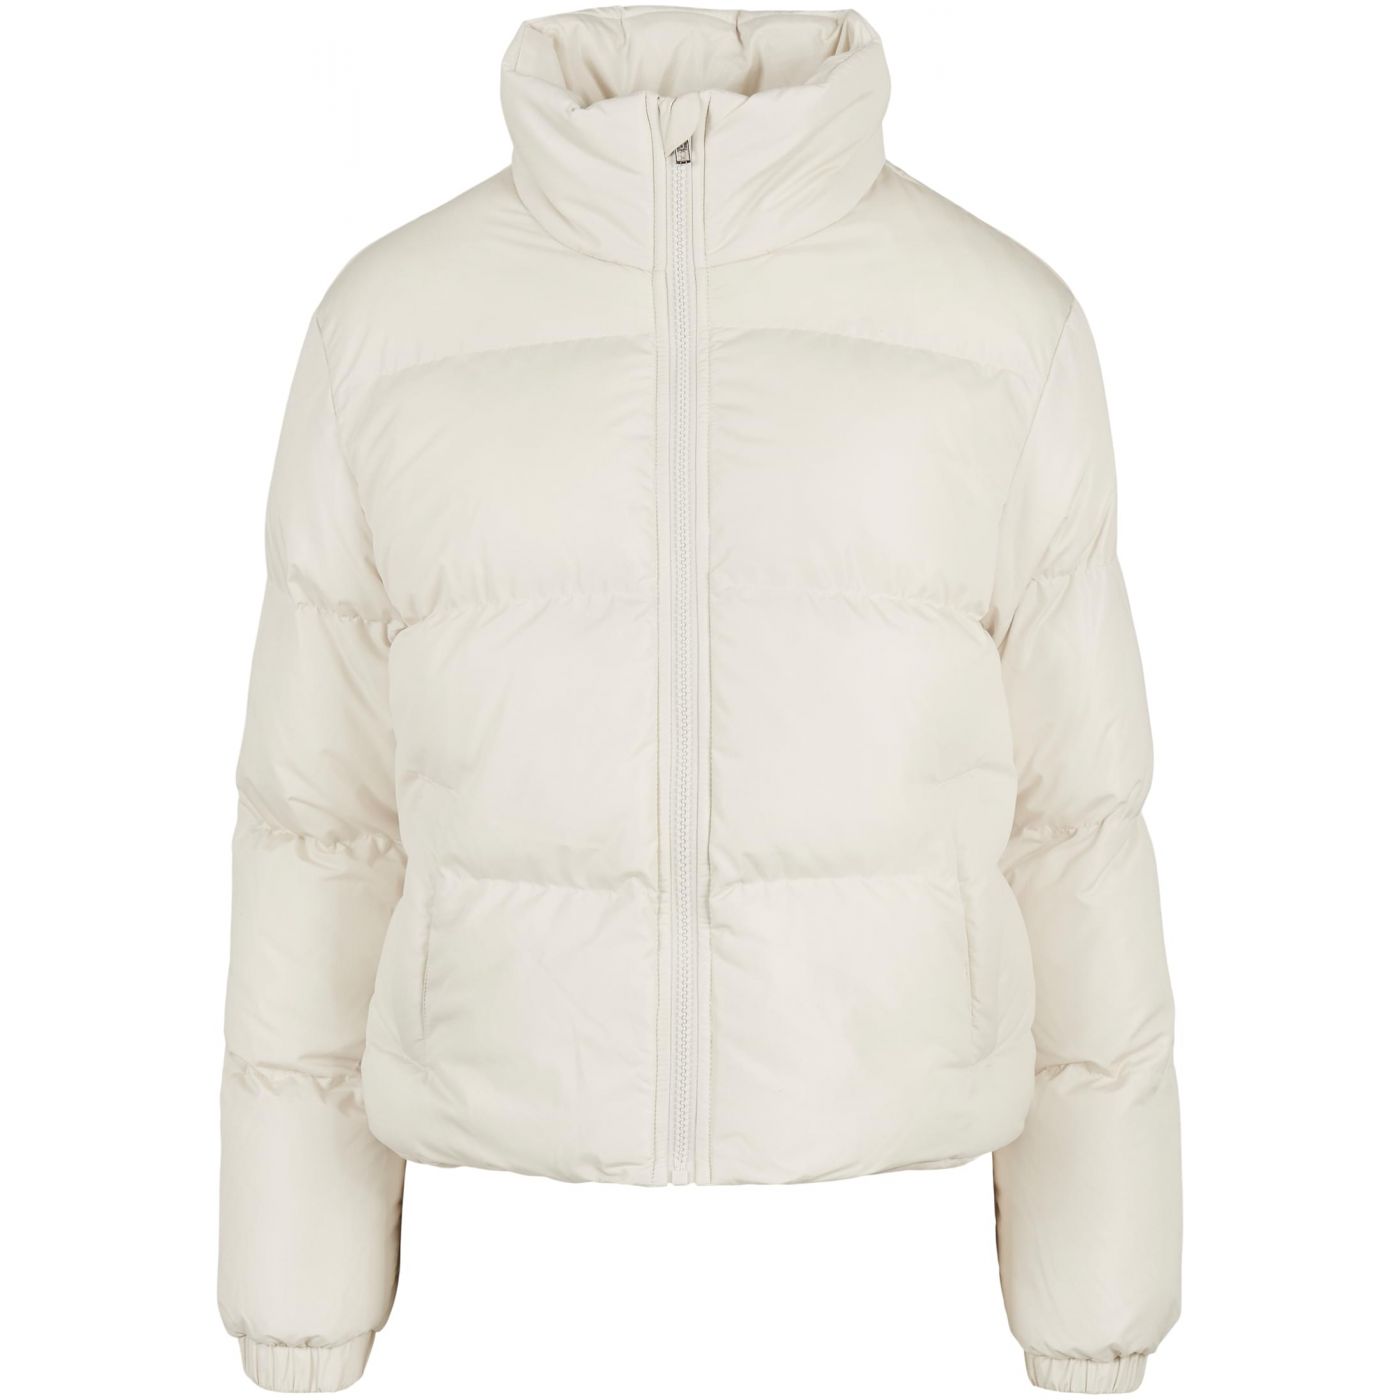 Women's short peach jacket with white sand